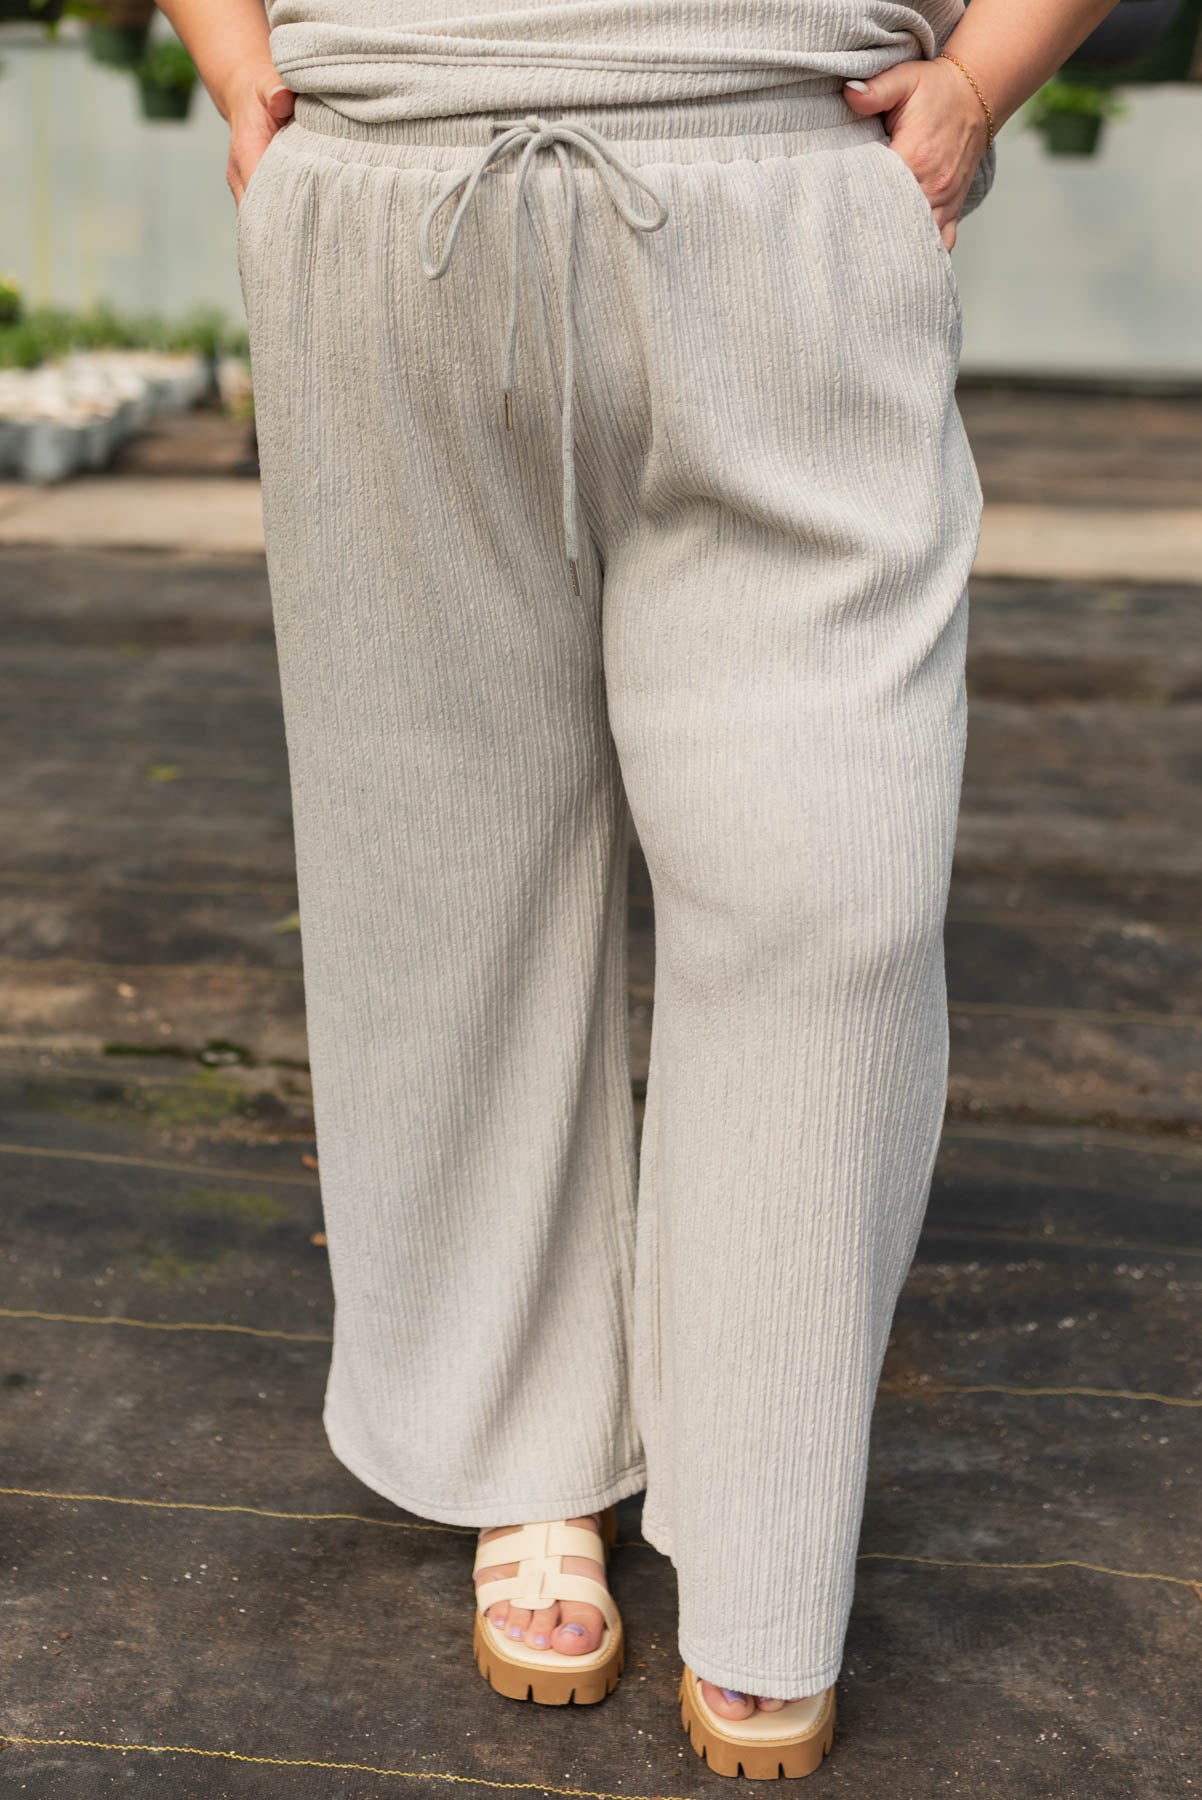 Plus size sage grey textured pants